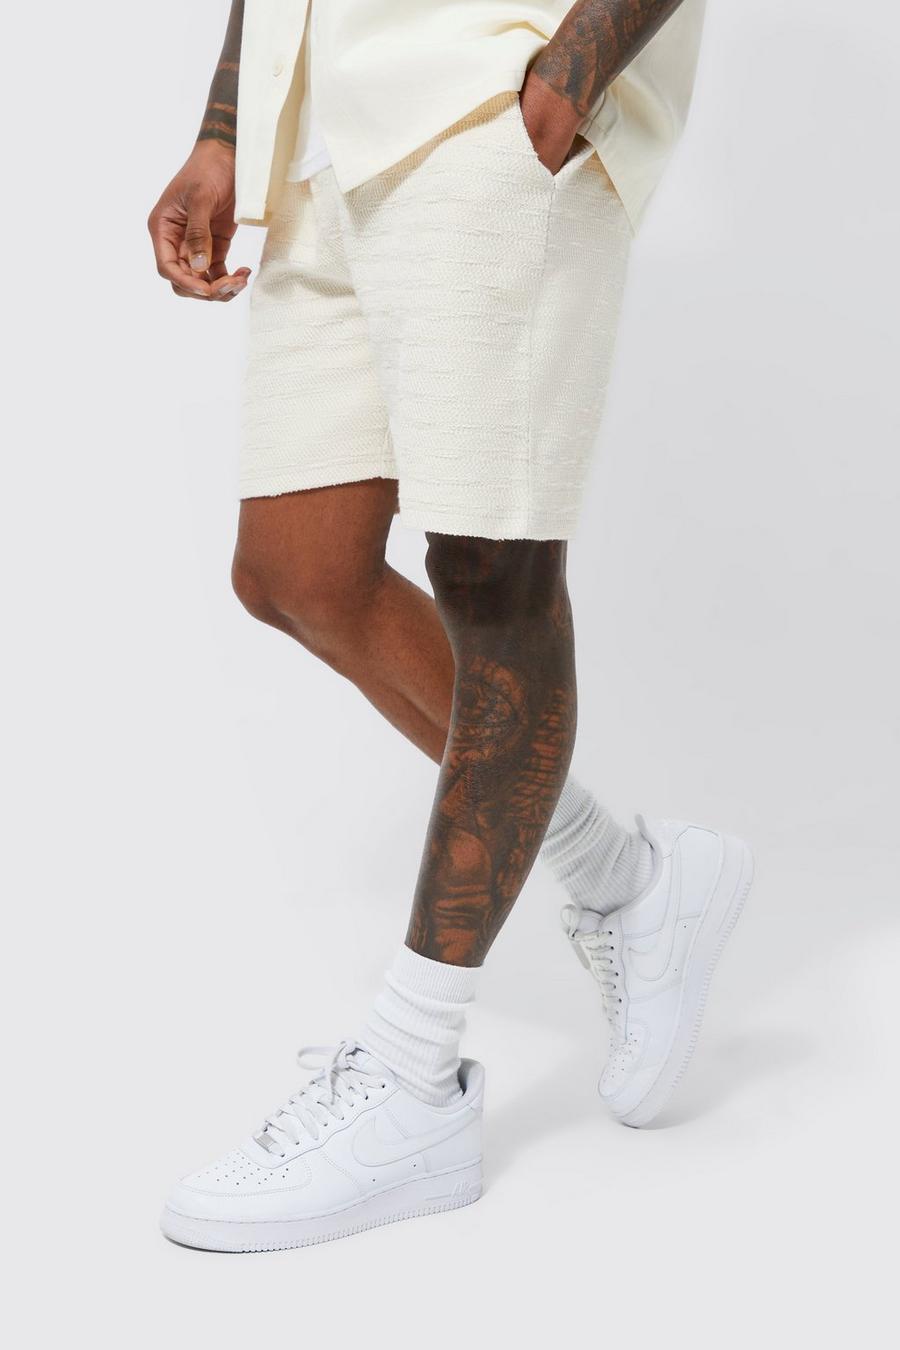 Lockere strukturierte Jacquard-Shorts, Ecru white